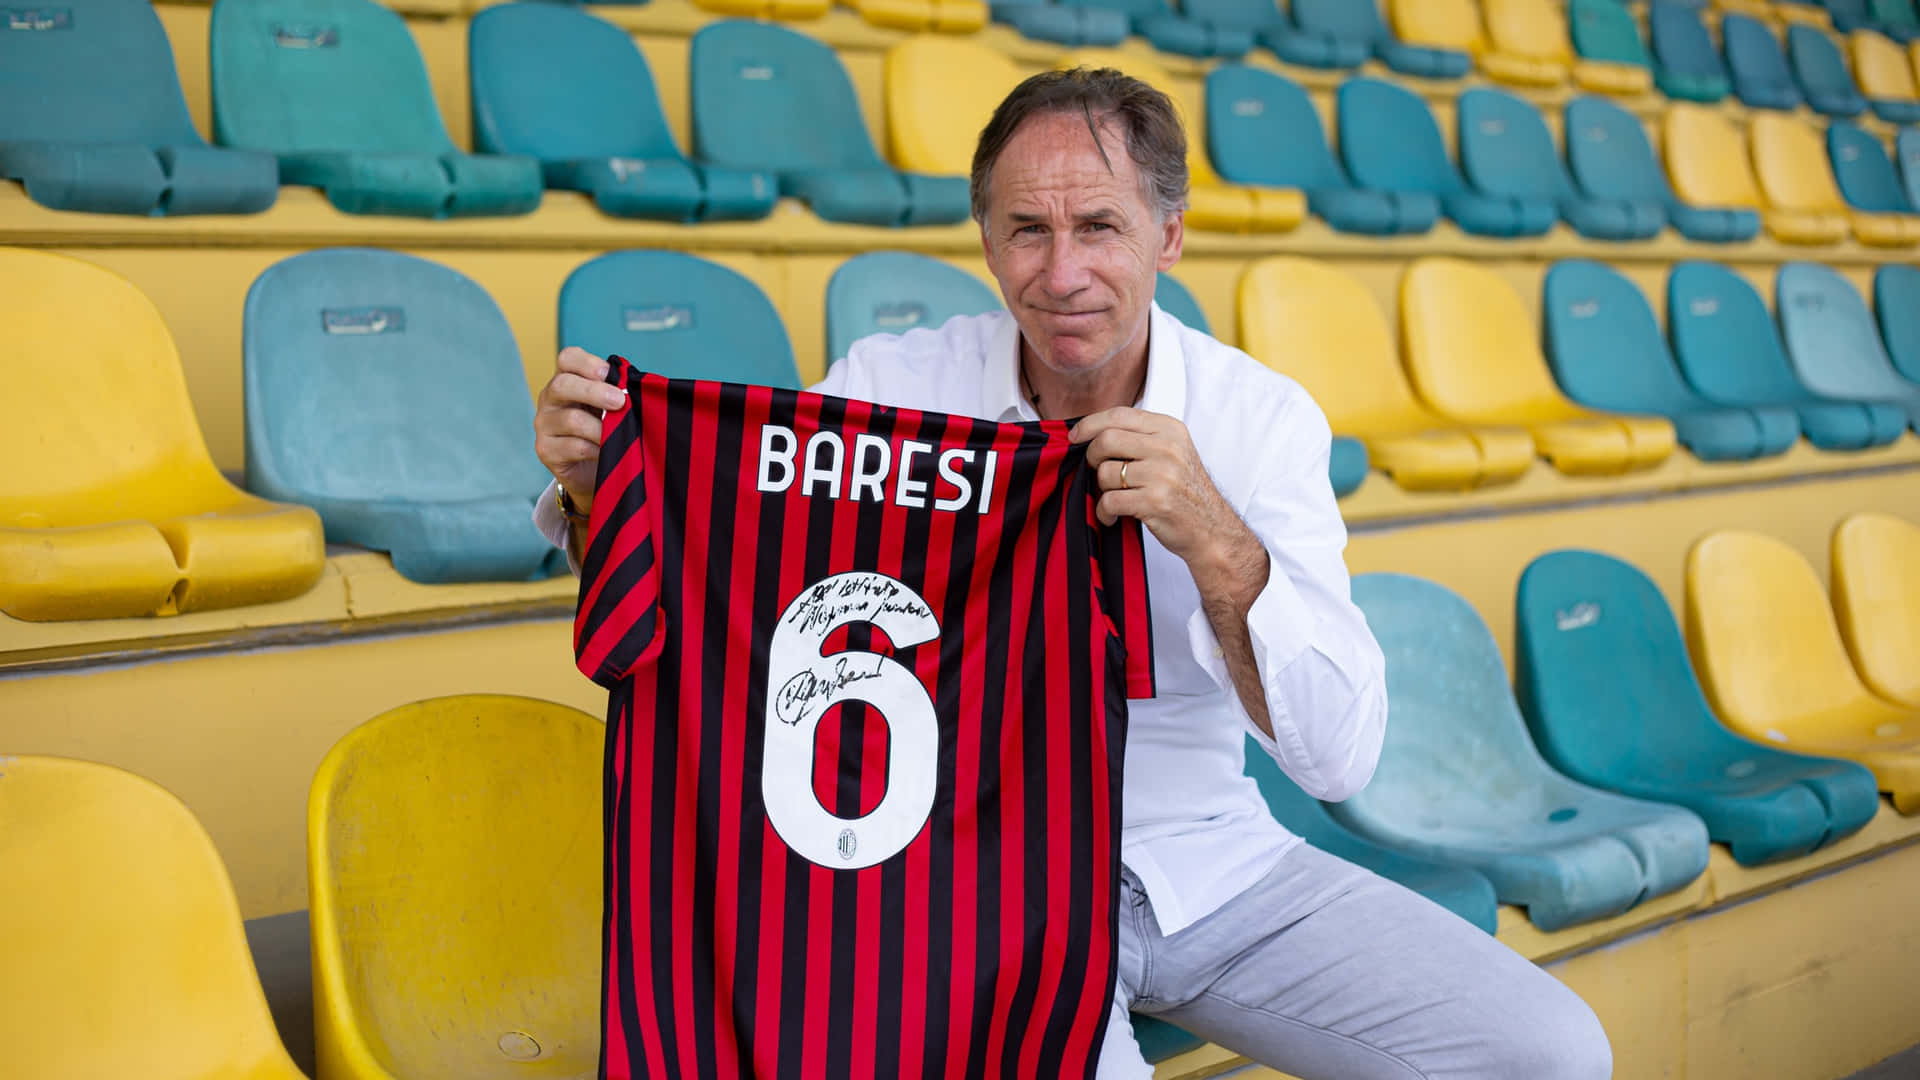 Franco Baresi Holding His Signed Jersey Background